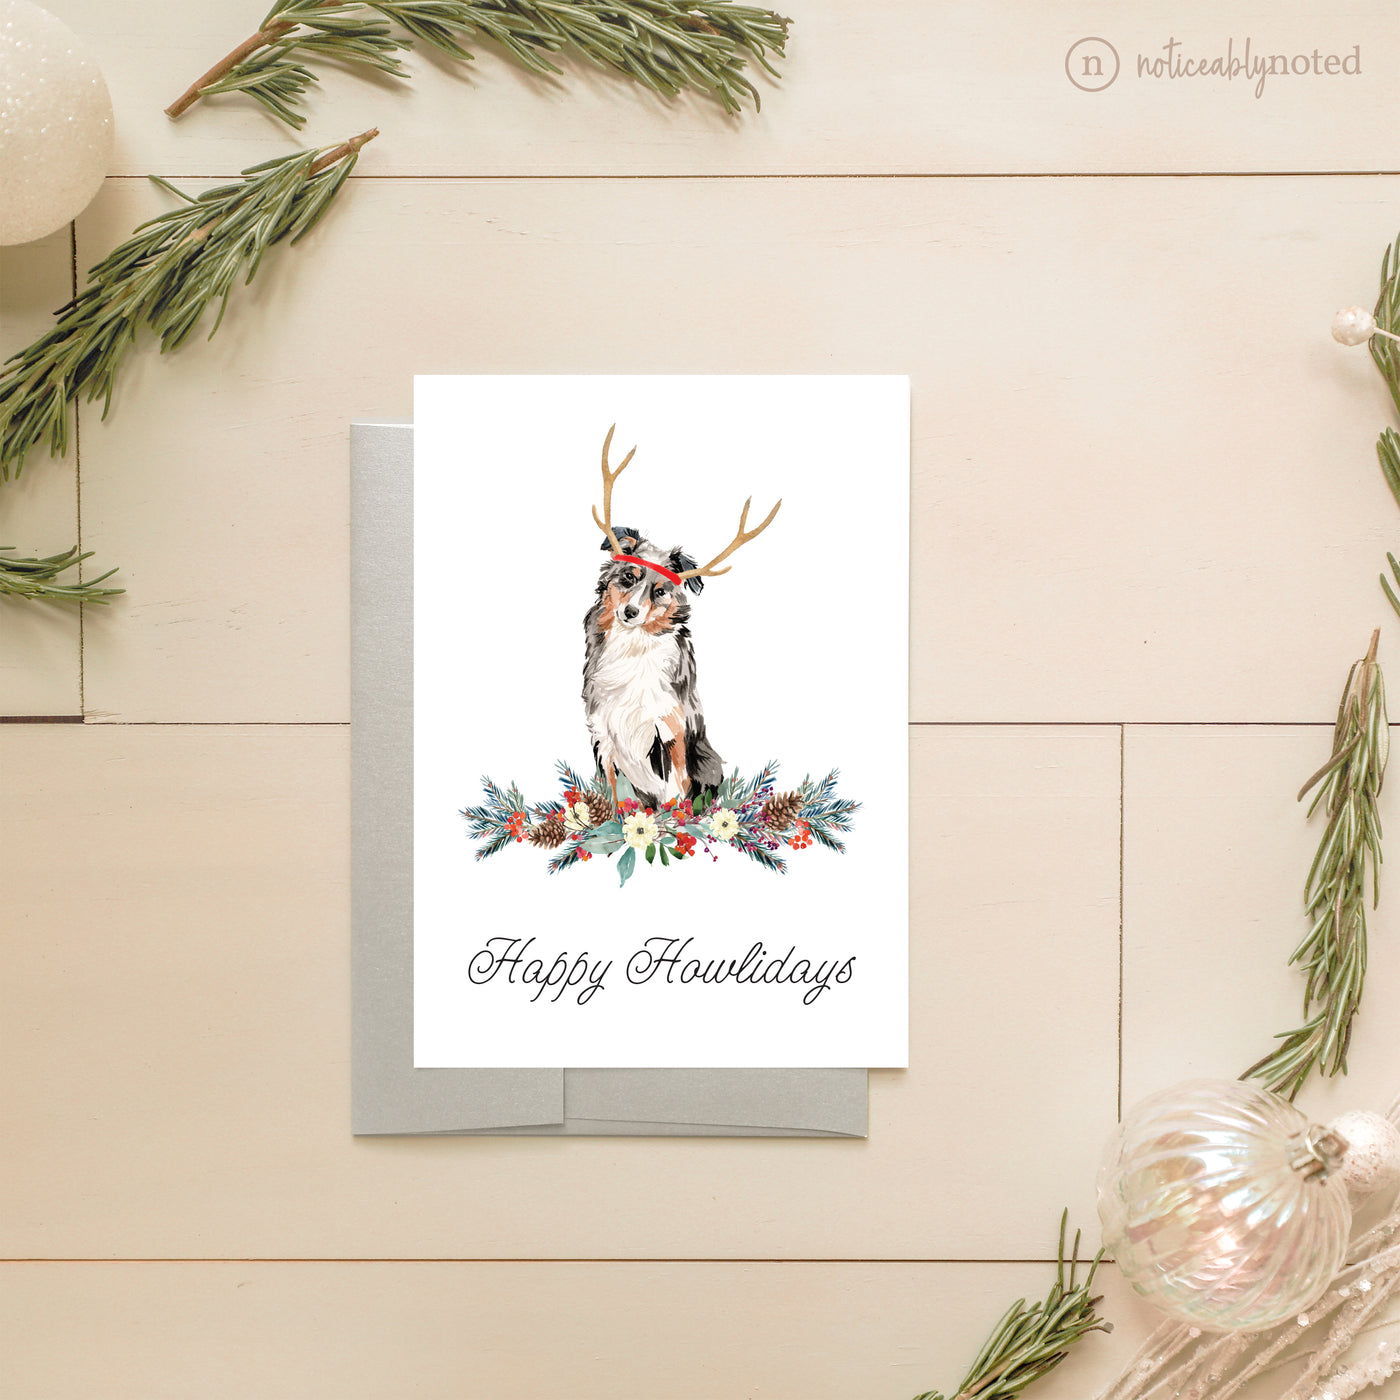 Australian Shepherd Dog Holiday Card | Noticeably Noted